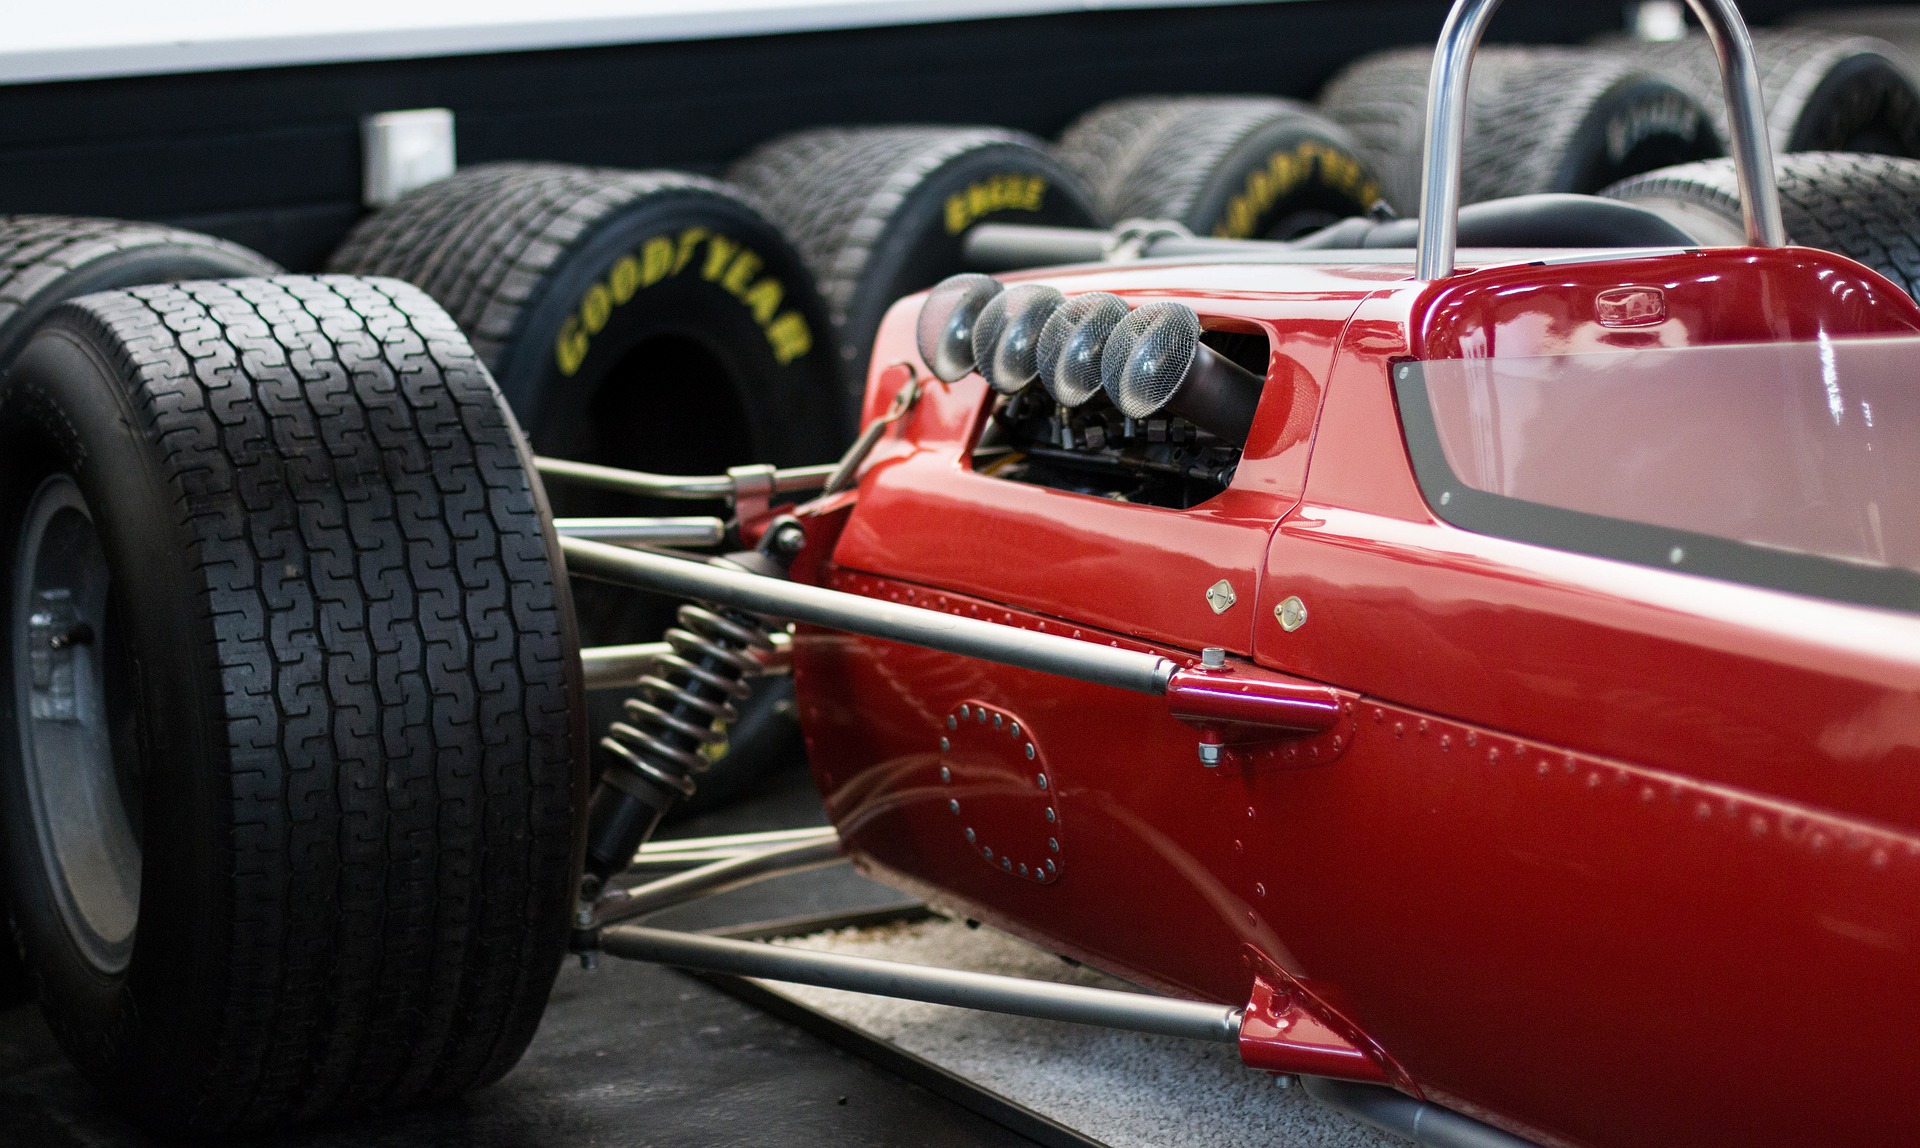 Serck Cooled Vintage Formula 1 Racing Car